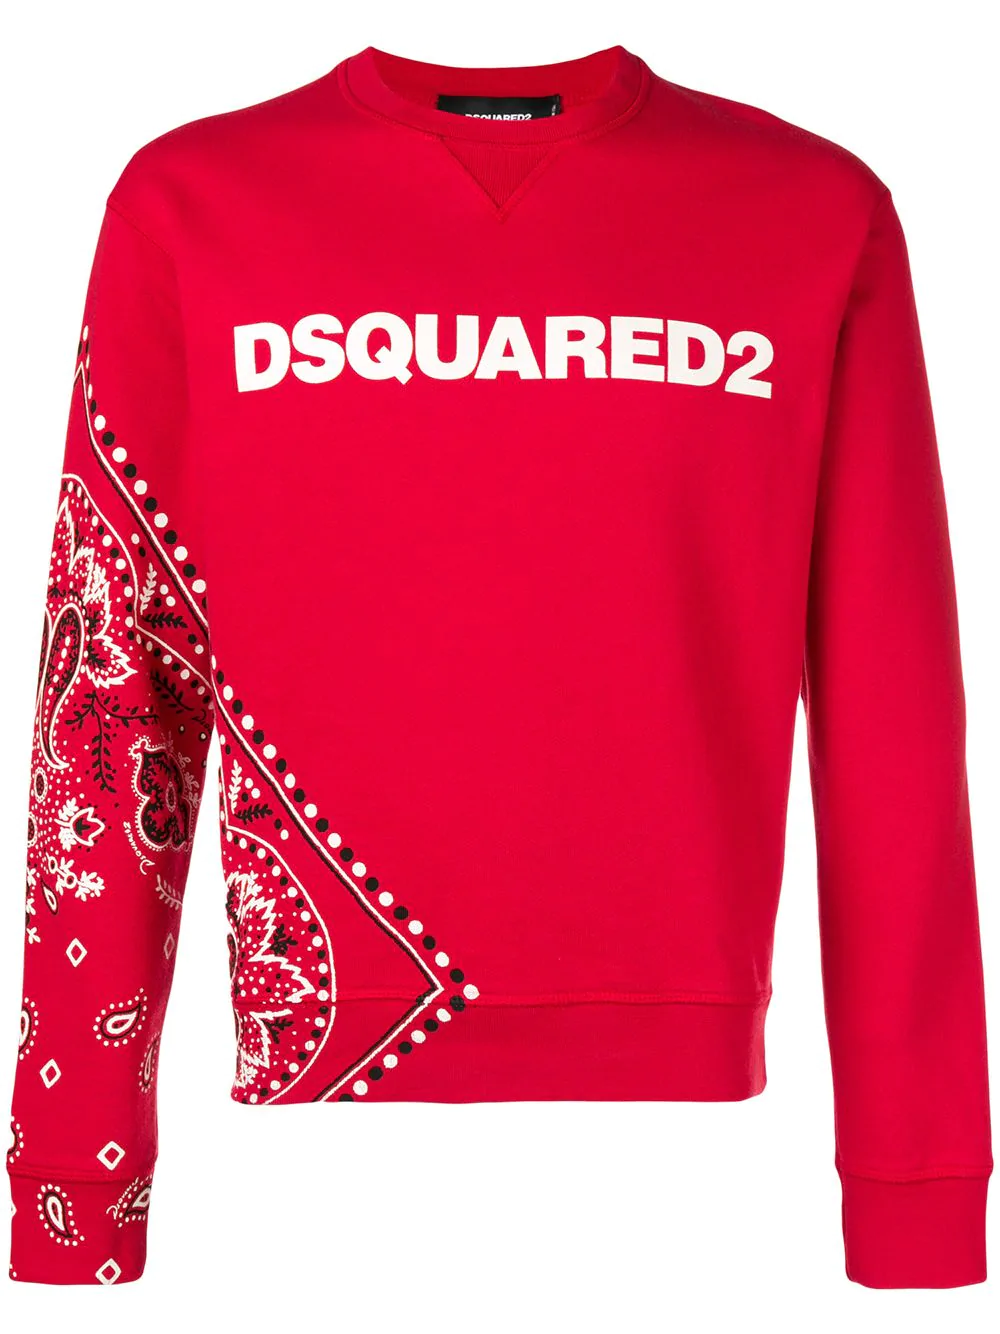 dsquared2 long sleeve logo sweatshirt